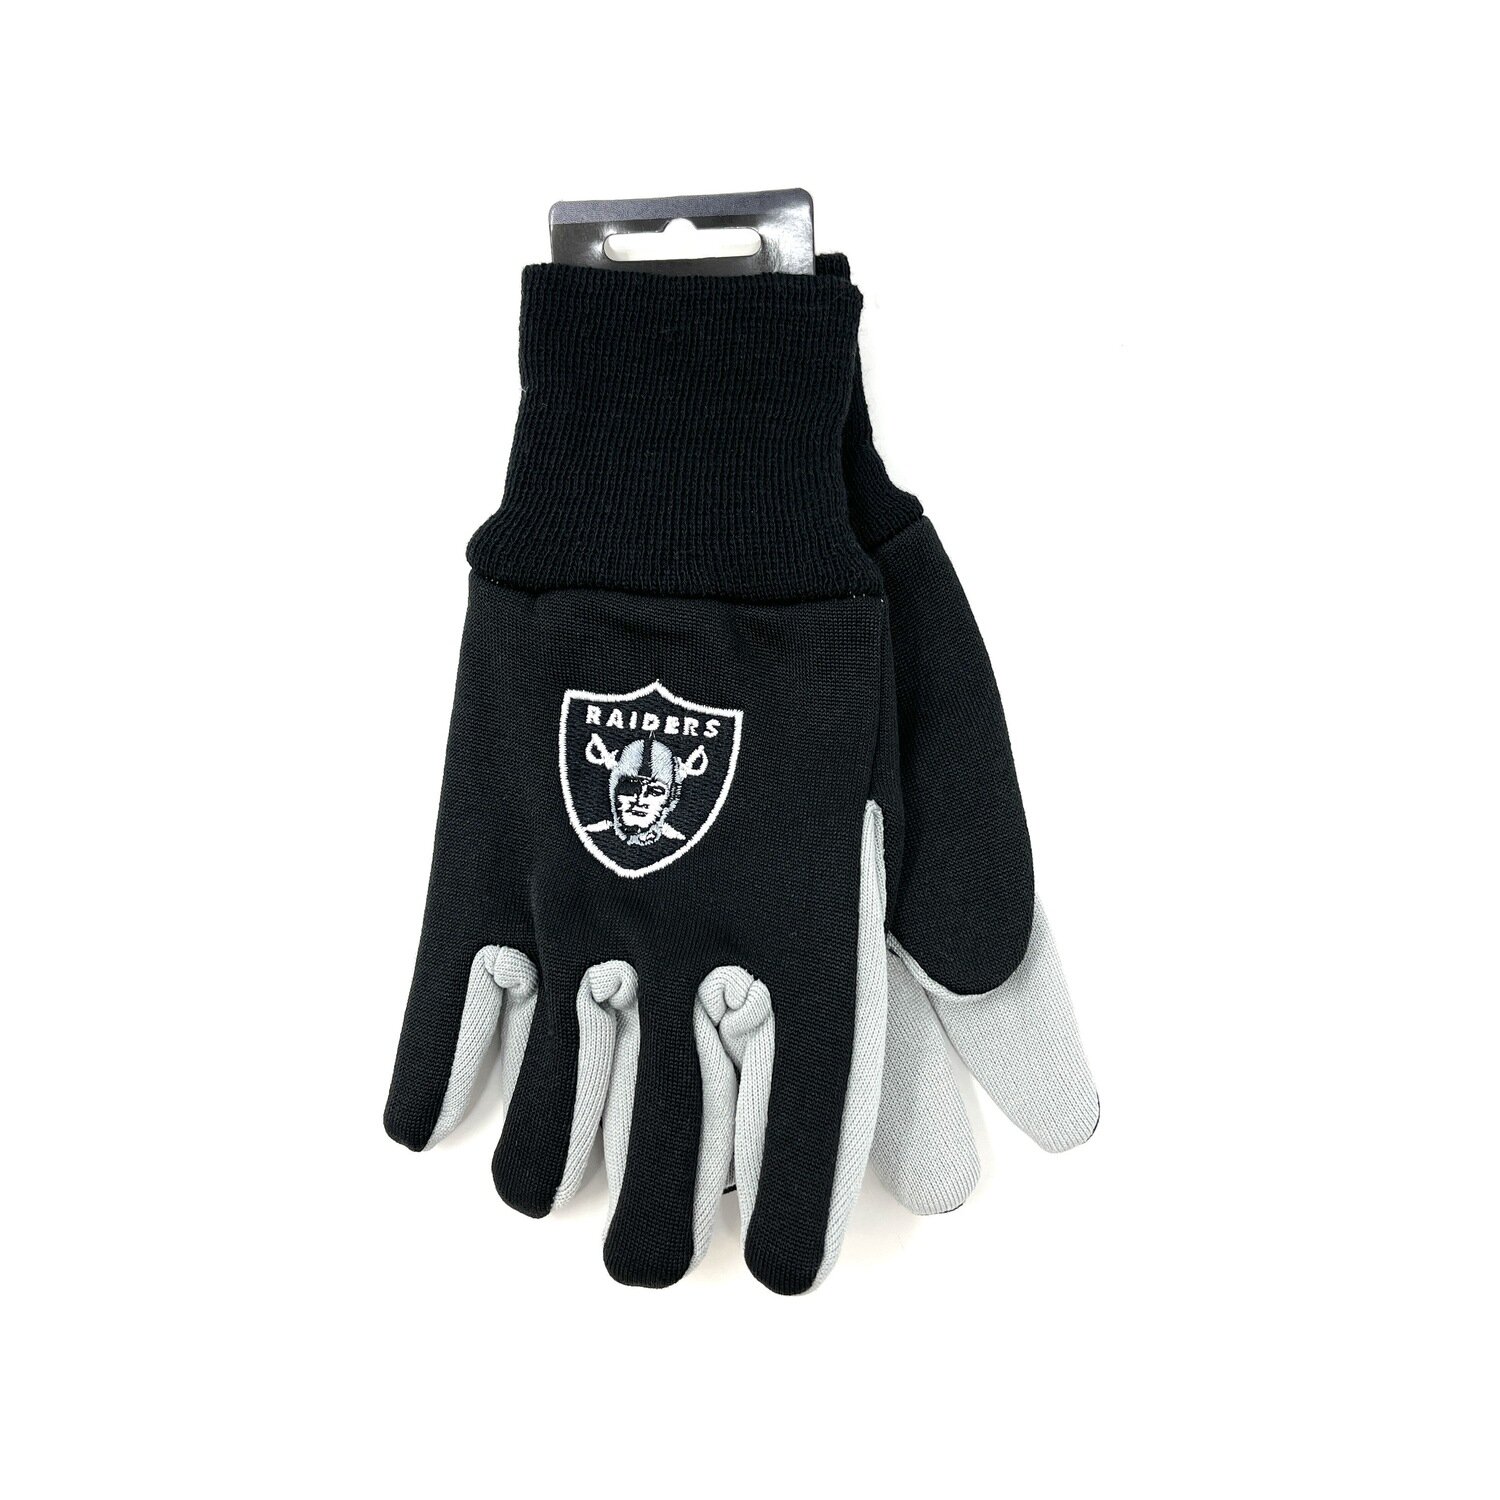 Las Vegas Raiders Utility Gloves